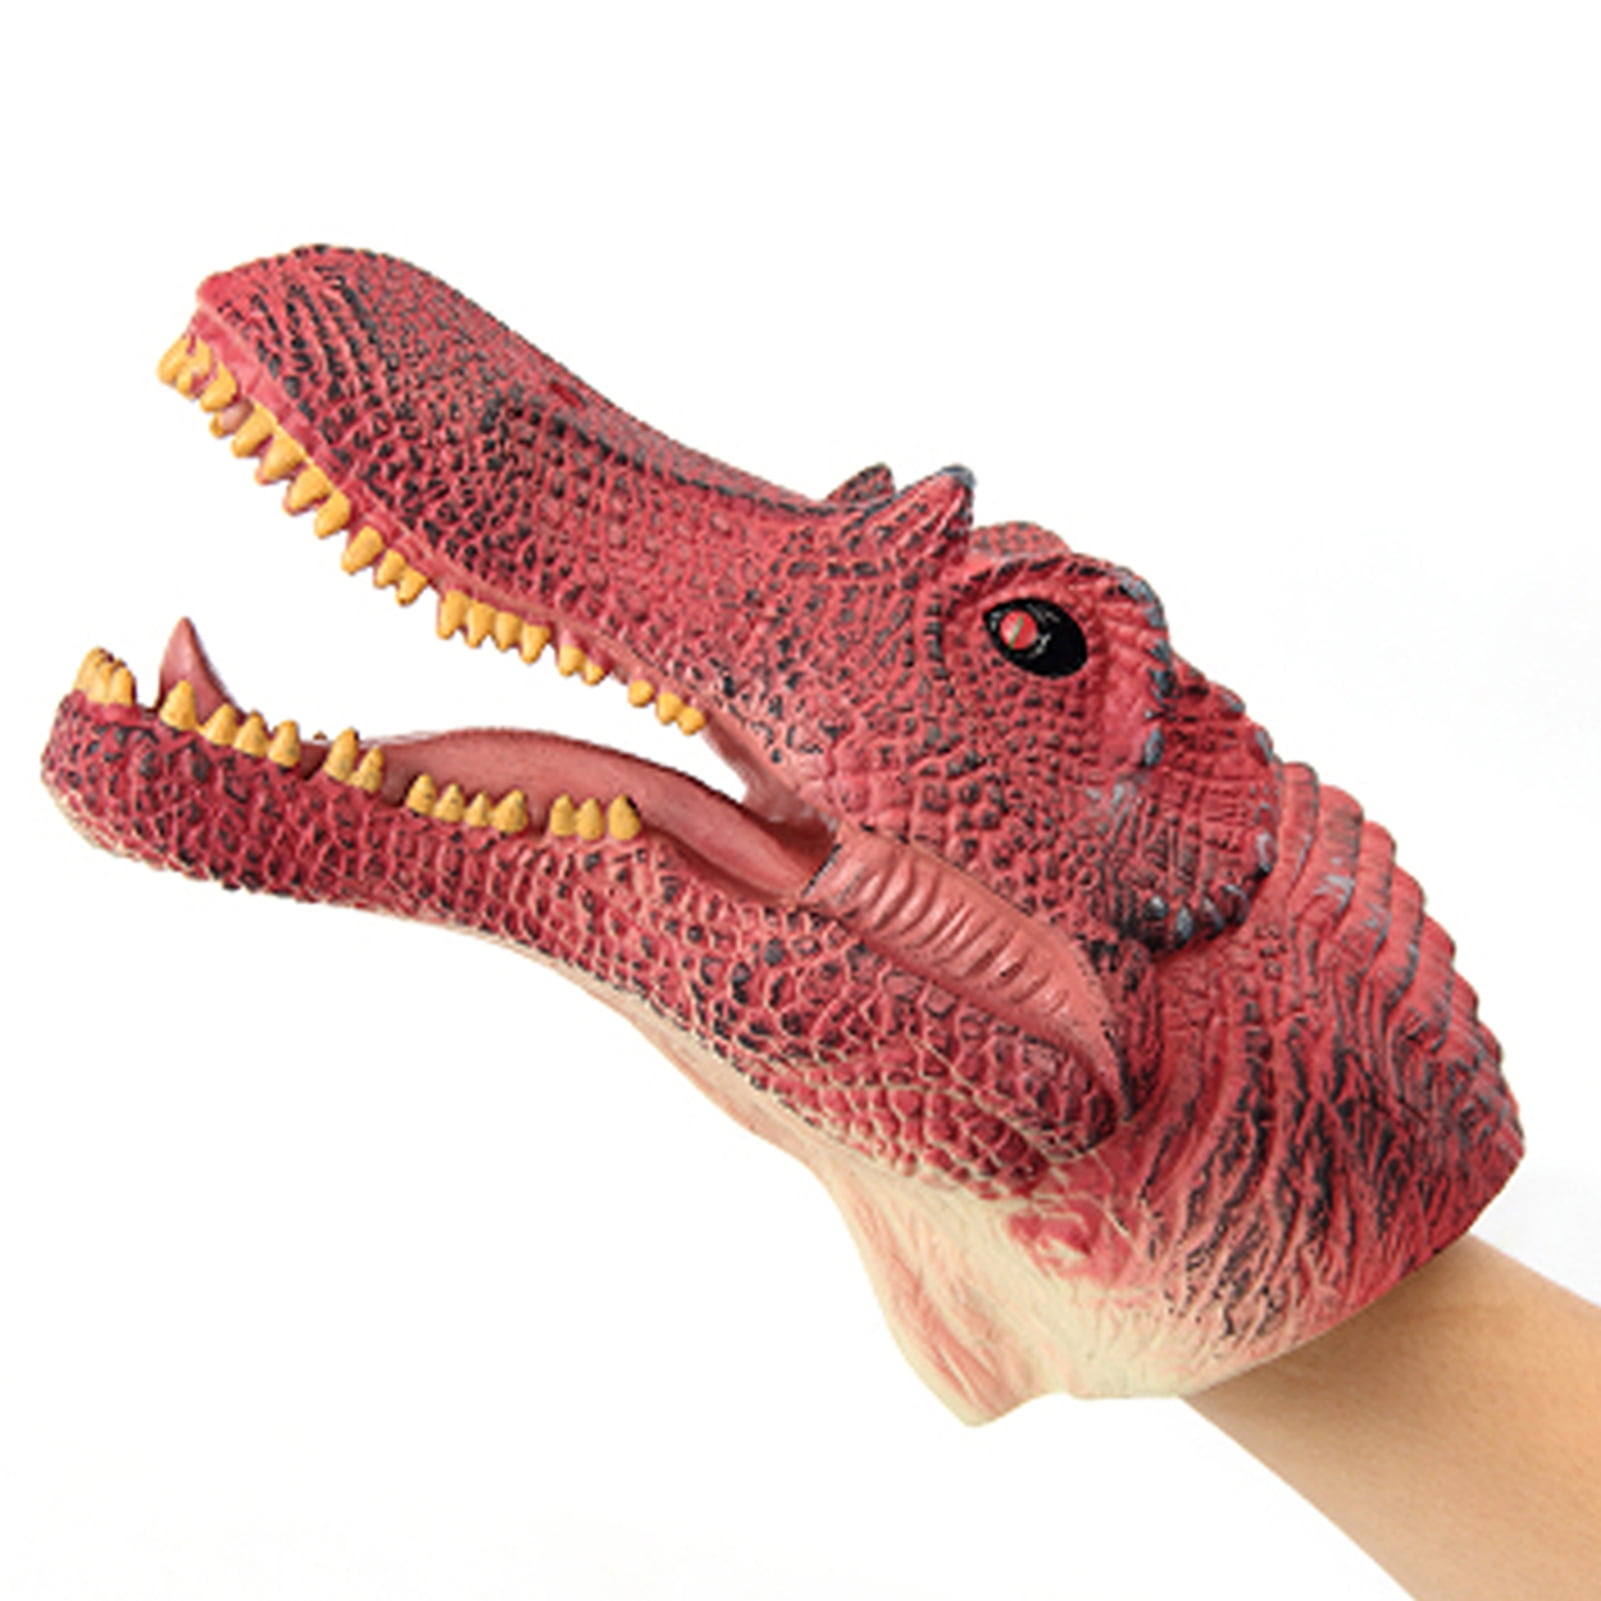 Wildlife Animal Hand Puppet Soft Dinosaur Mouth Deformation Birthday Toy Gift